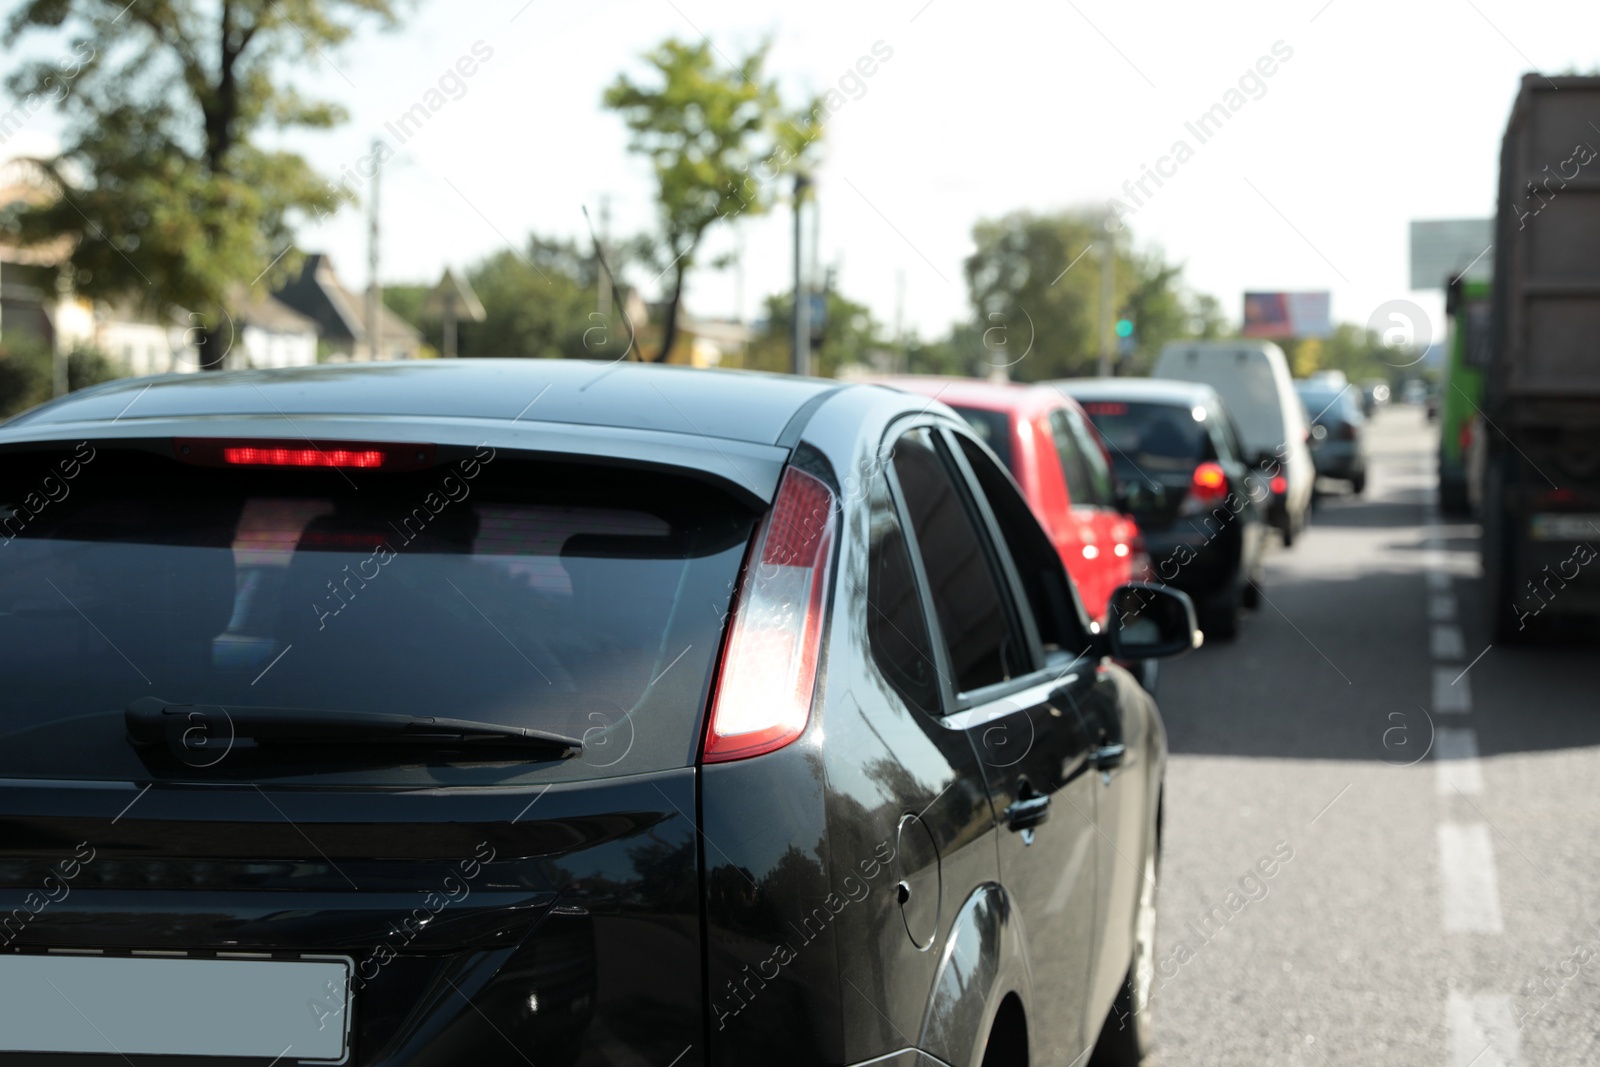 Photo of Cars in traffic jam on city street